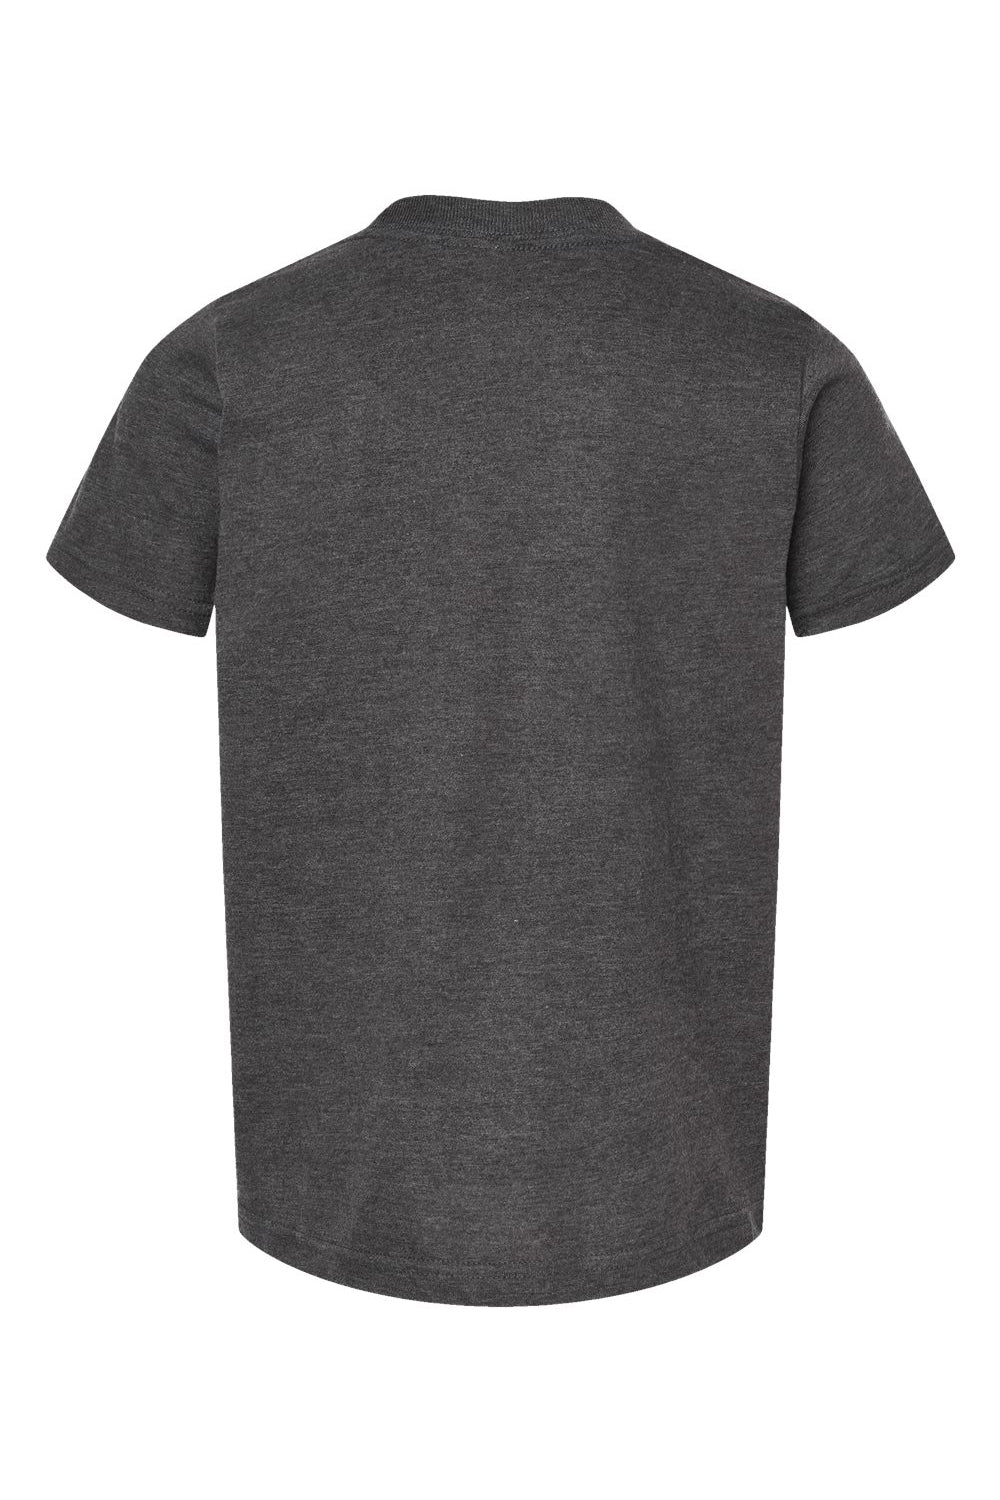 Tultex 235 Youth Fine Jersey Short Sleeve Crewneck T-Shirt Heather Charcoal Grey Flat Back